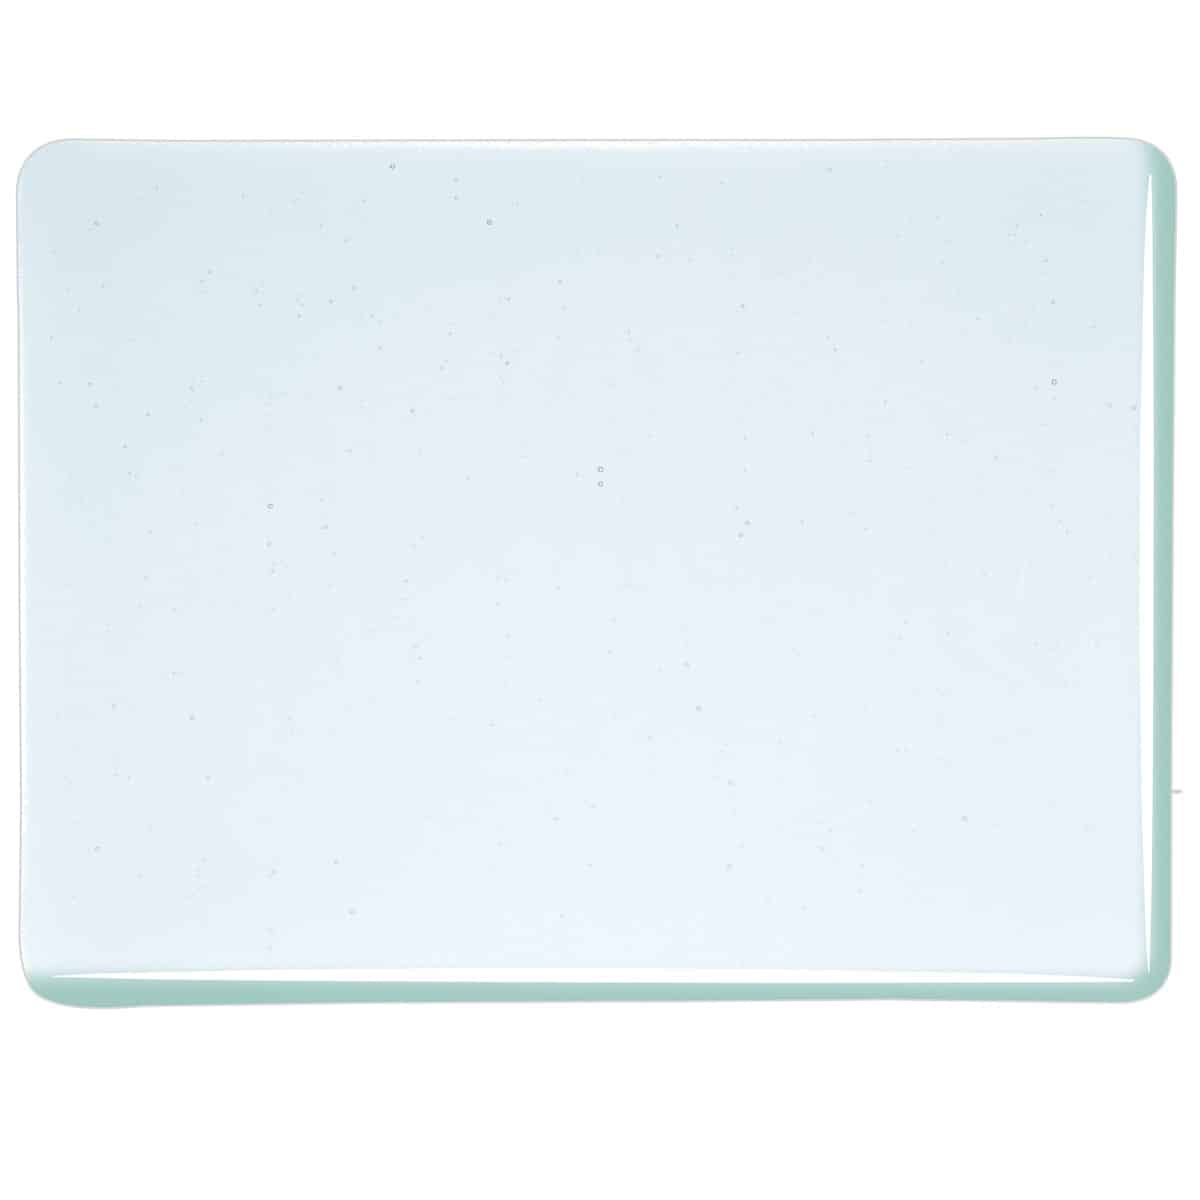 001844 Lavender Green Shift Tint transparent sheet glass swatch